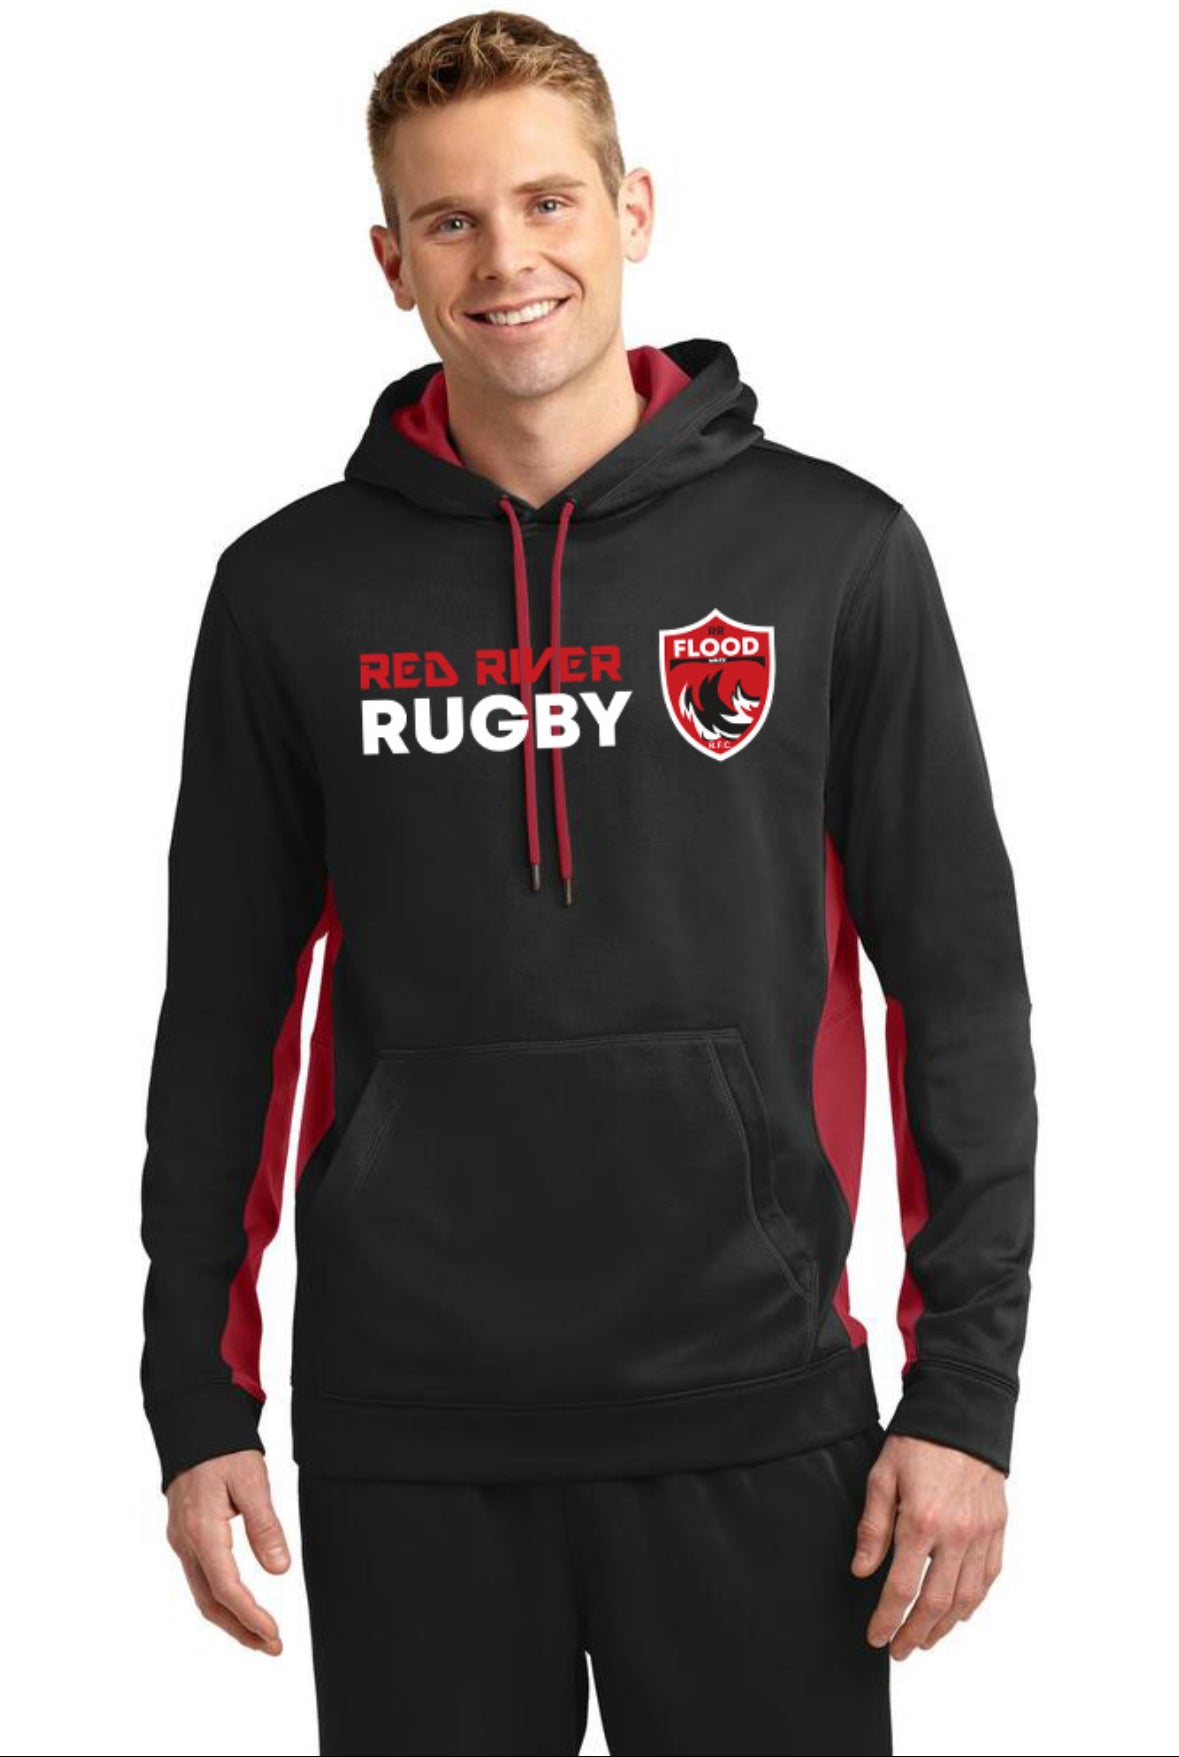 Red River Rugby Fleece Colorblock Hooded Sweatshirt